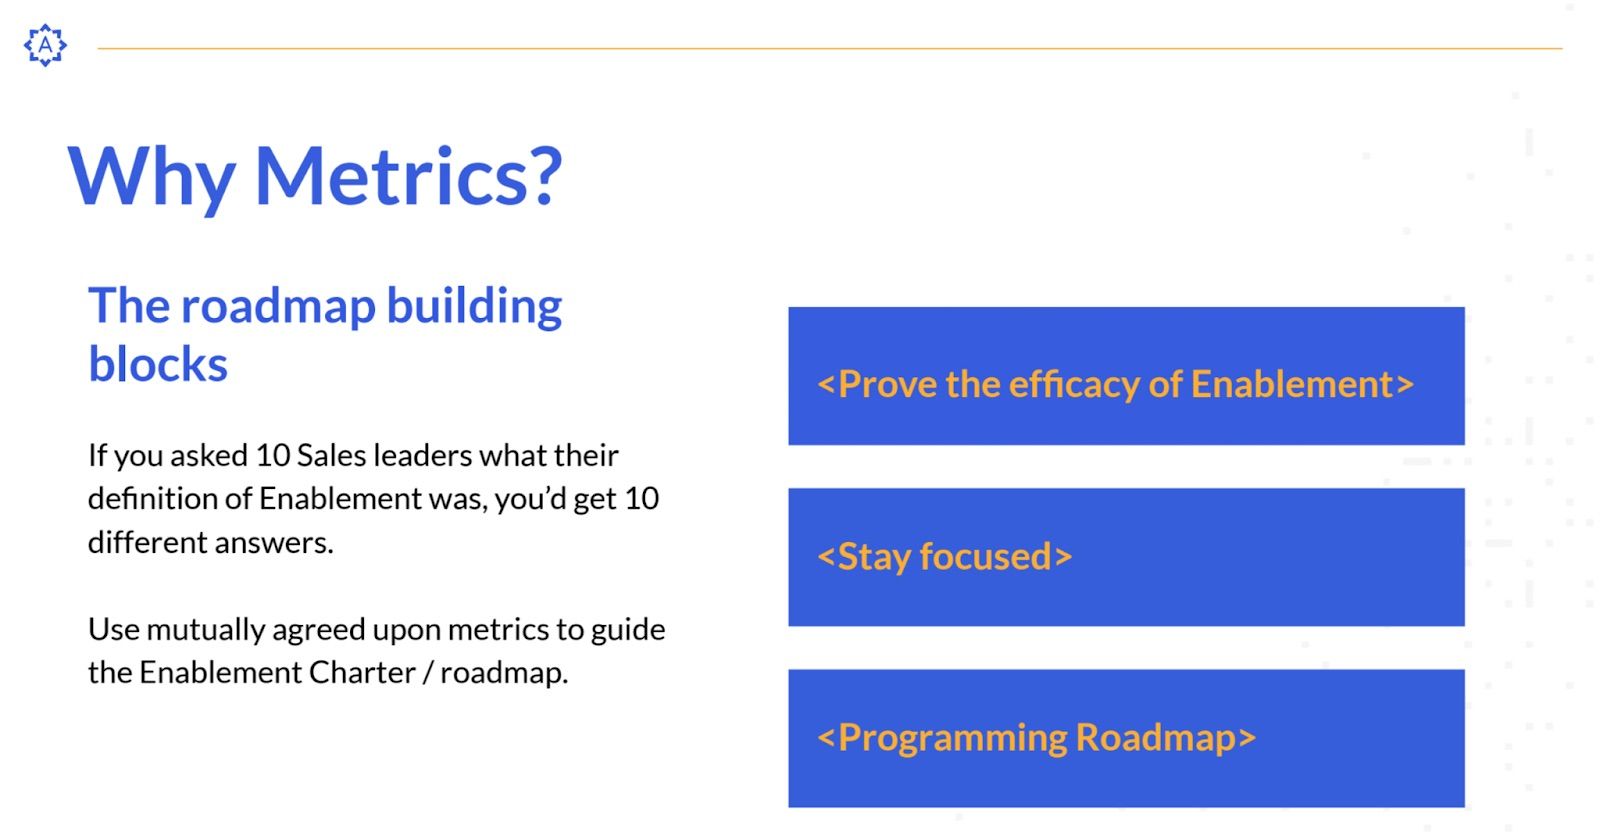 why metrics - the roadmap building blocks